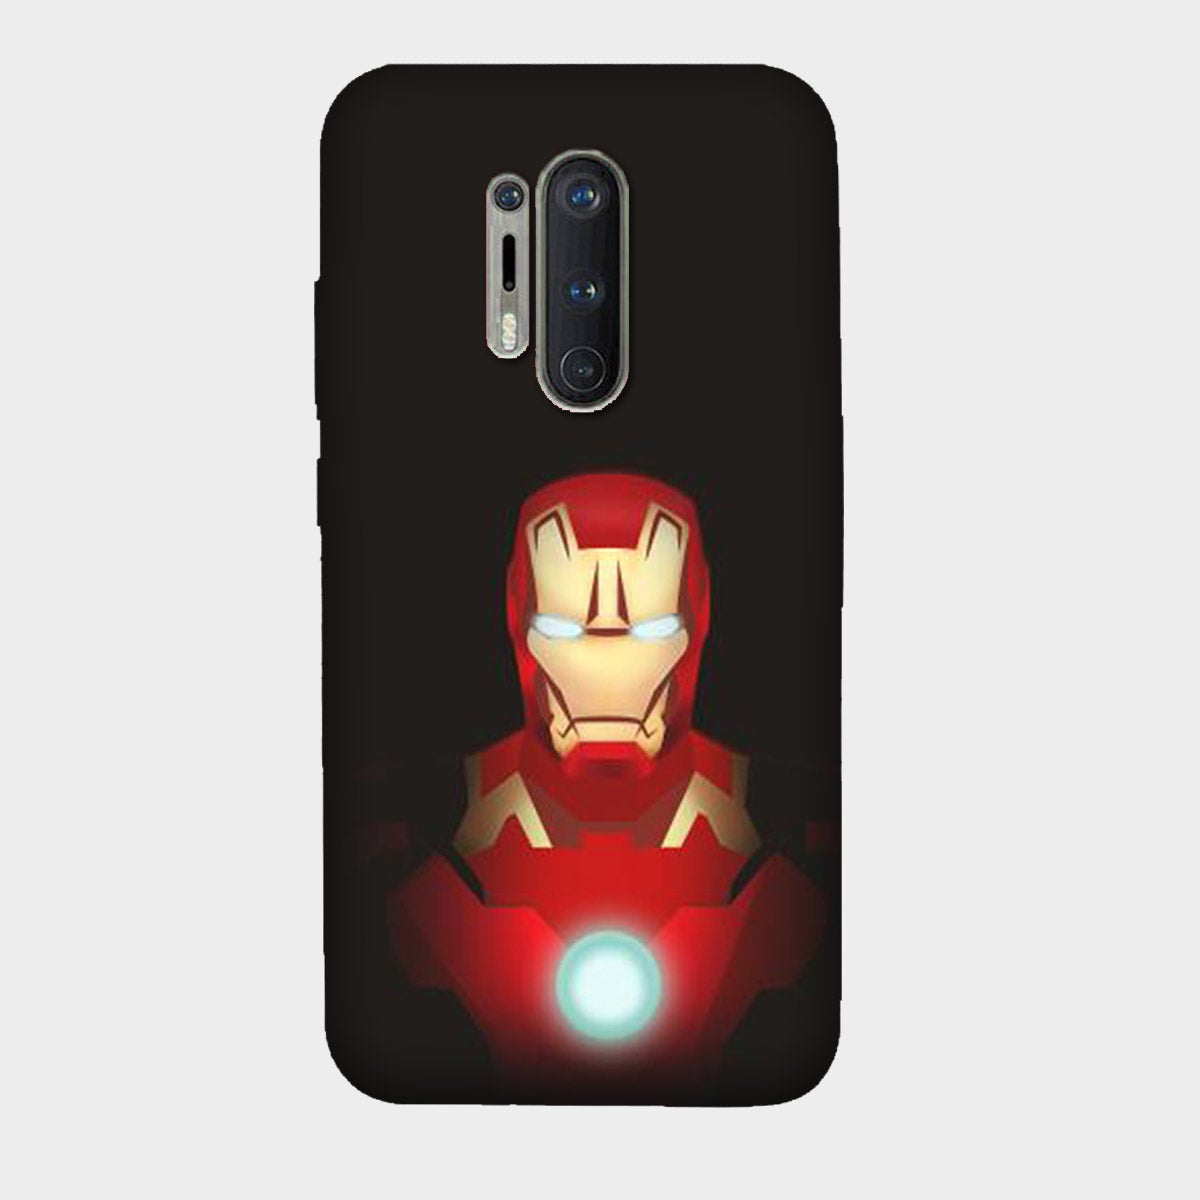 Iron Man - Black - Mobile Phone Cover - Hard Case - OnePlus